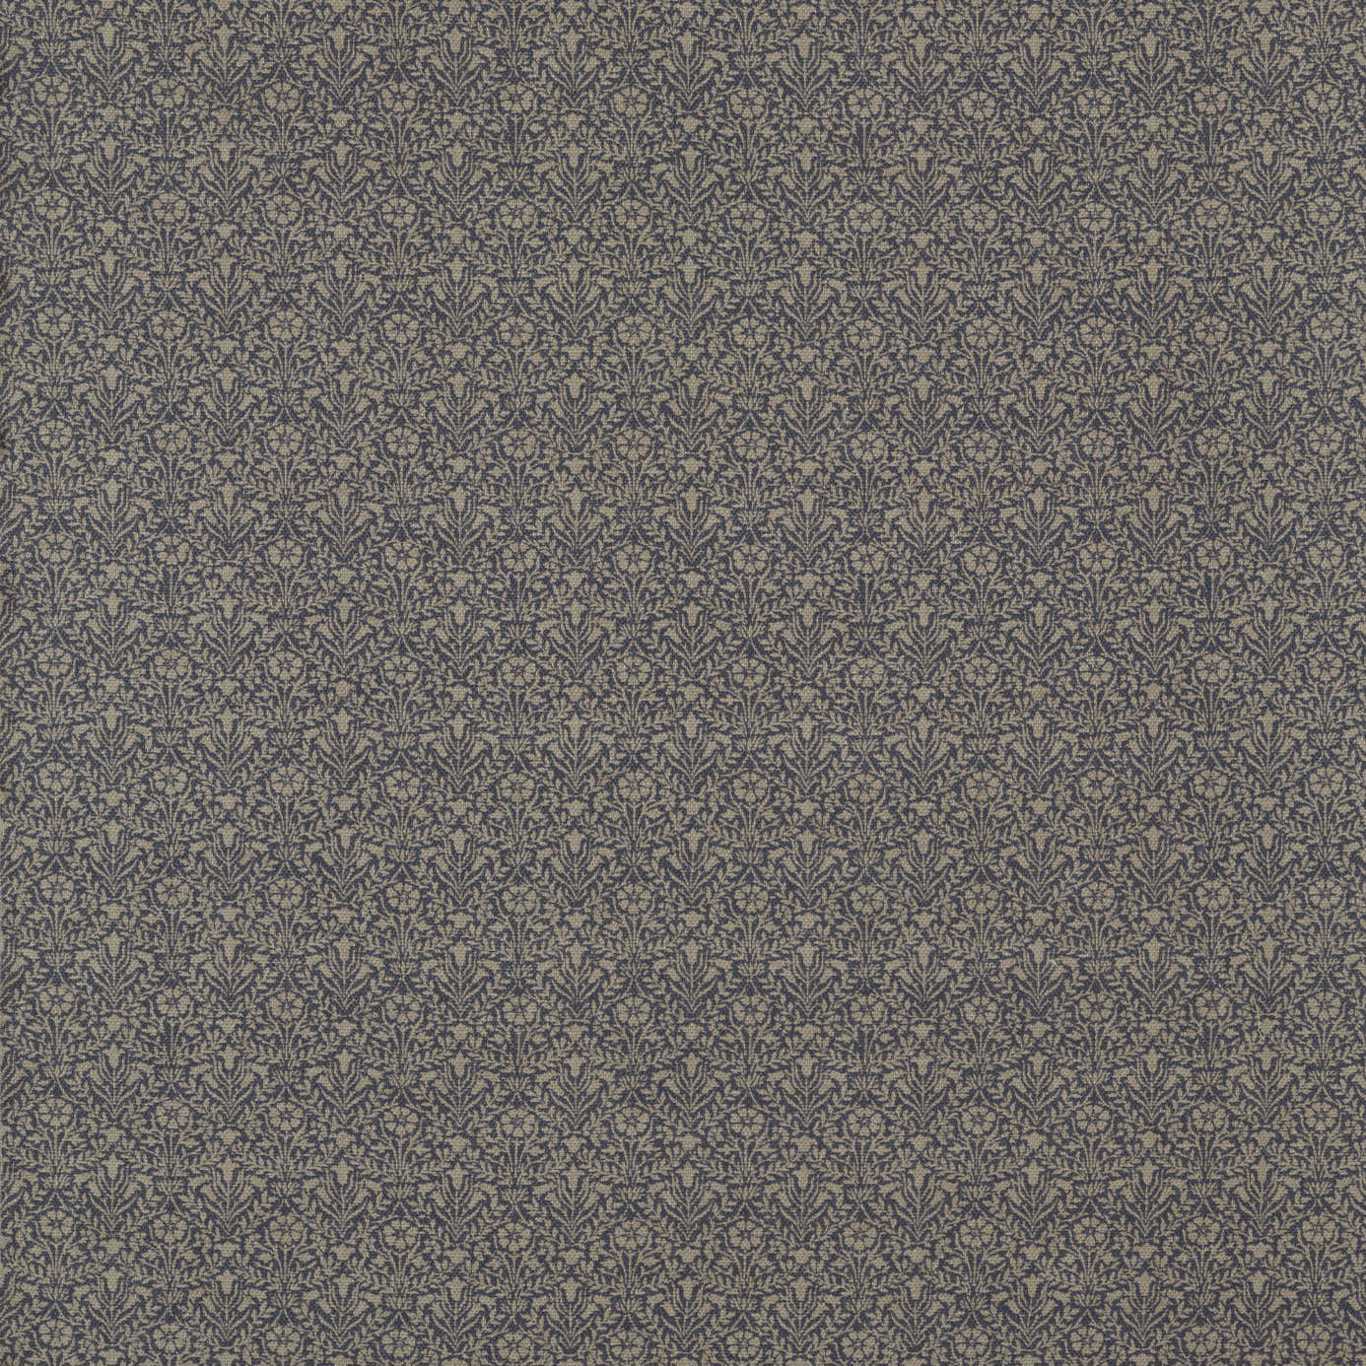 Bellflowers Weave Fabric by Morris & Co. - DM4U236525 - Indigo